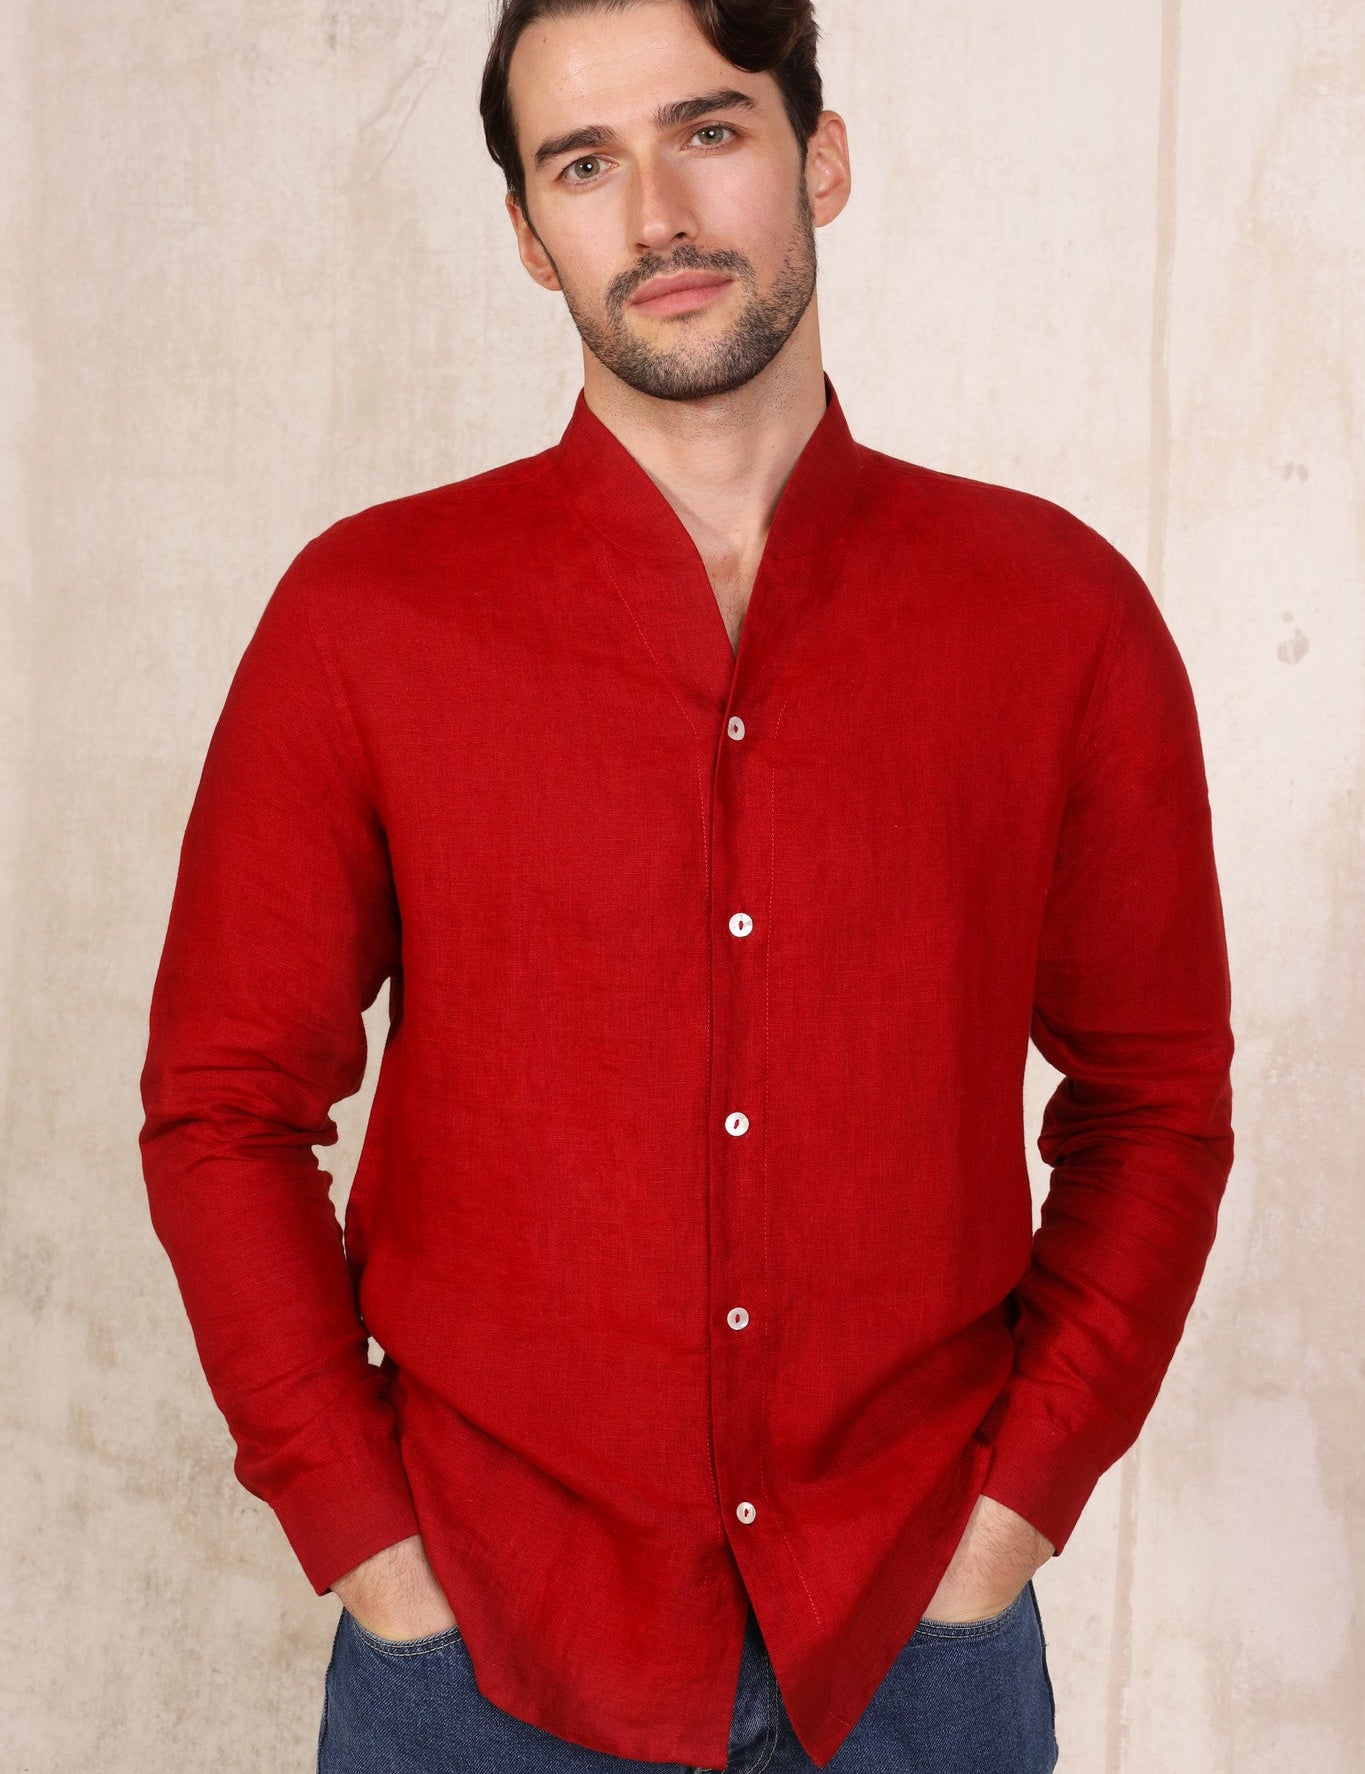 dark-red-mens-linen-shirt-front-view_5999a3ca-34f7-45e5-a66f-1edc456c4b34.jpg